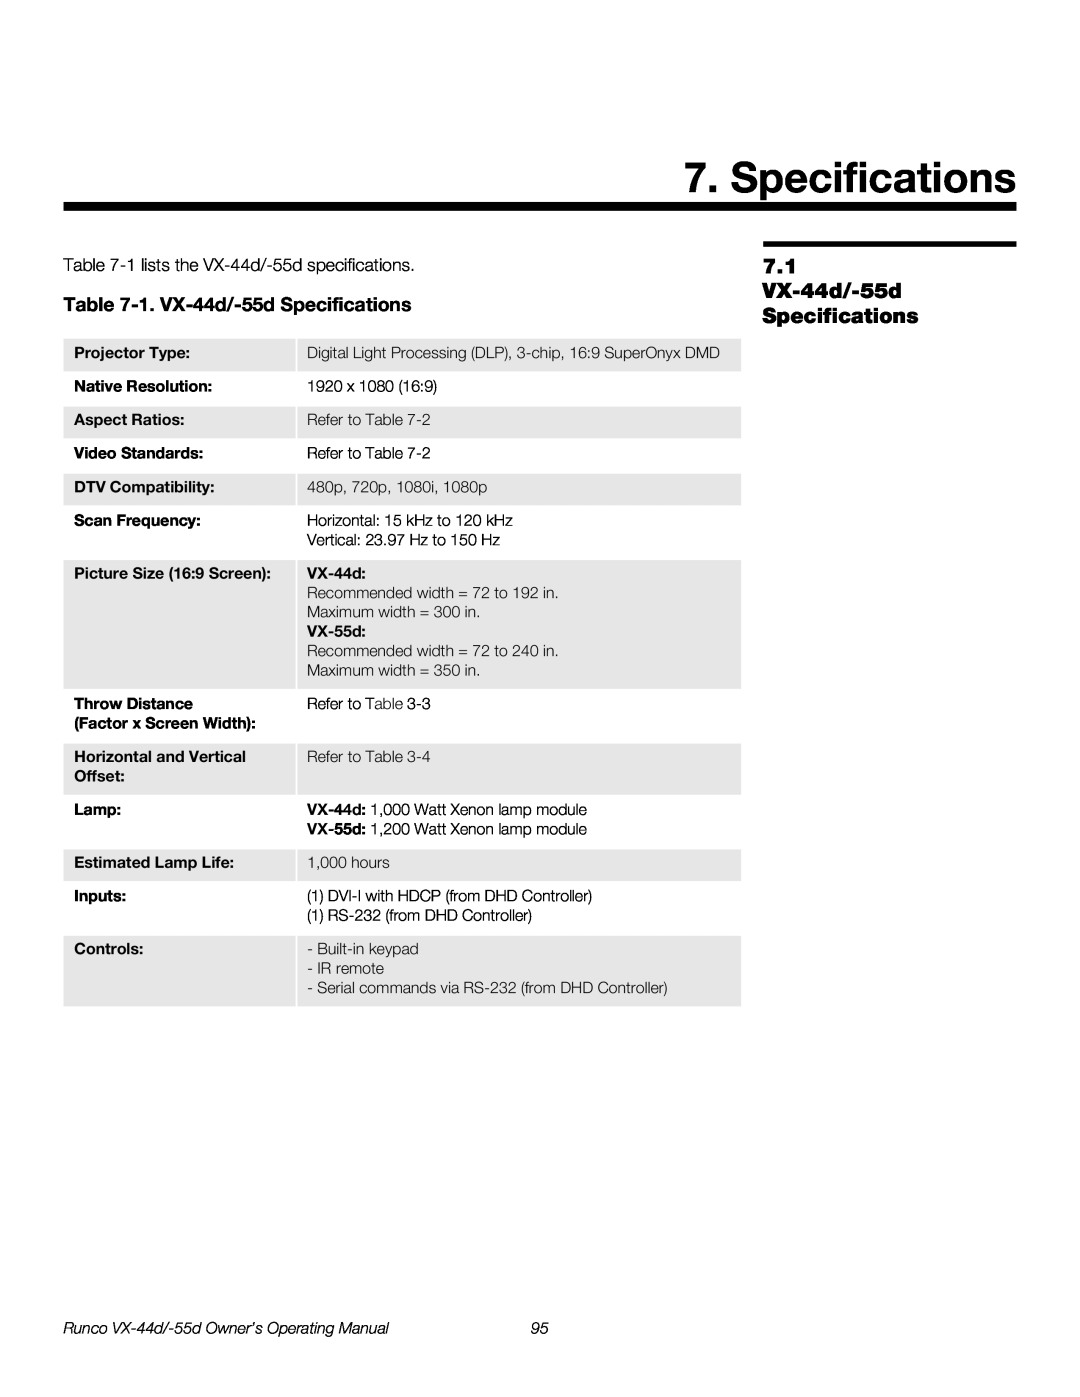 Runco VX-55D 7.1 VX-44d/-55d Specifications, 1. VX-44d/-55d Specifications, Runco VX-44d/-55d Owner’s Operating Manual 